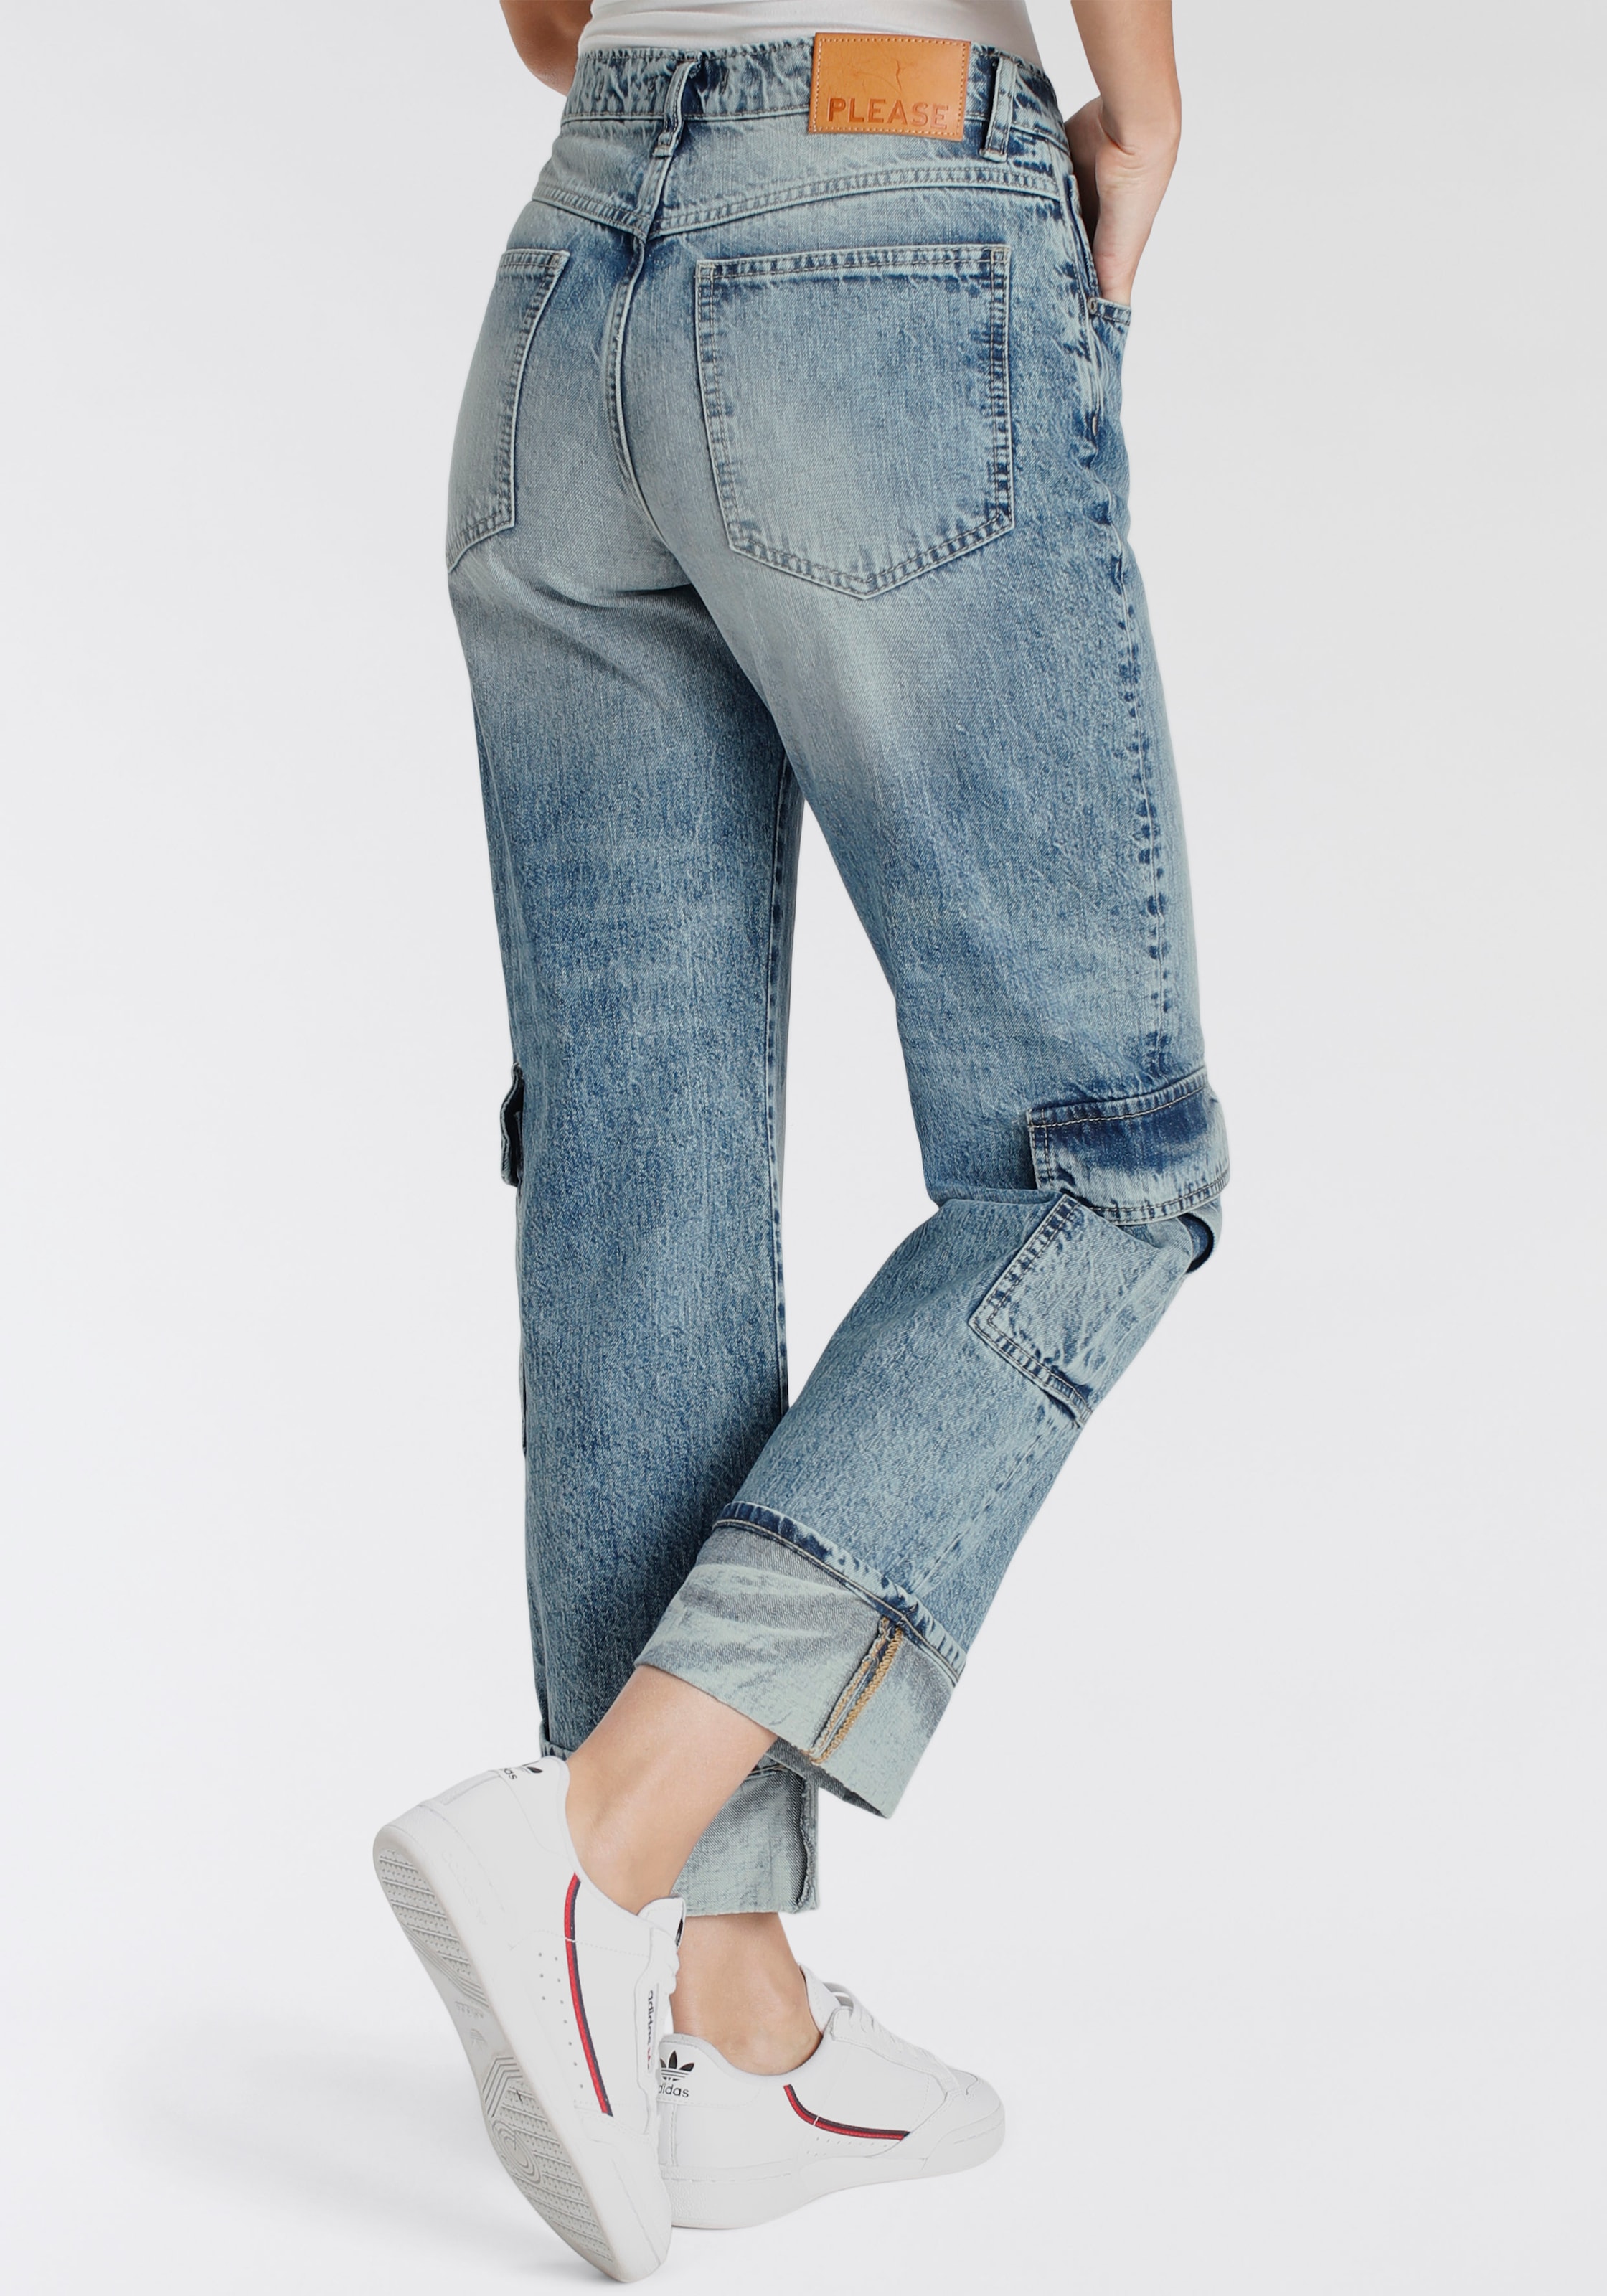 Please Jeans Boyfriend-Hose kaufen bei OTTO | Stretchhosen